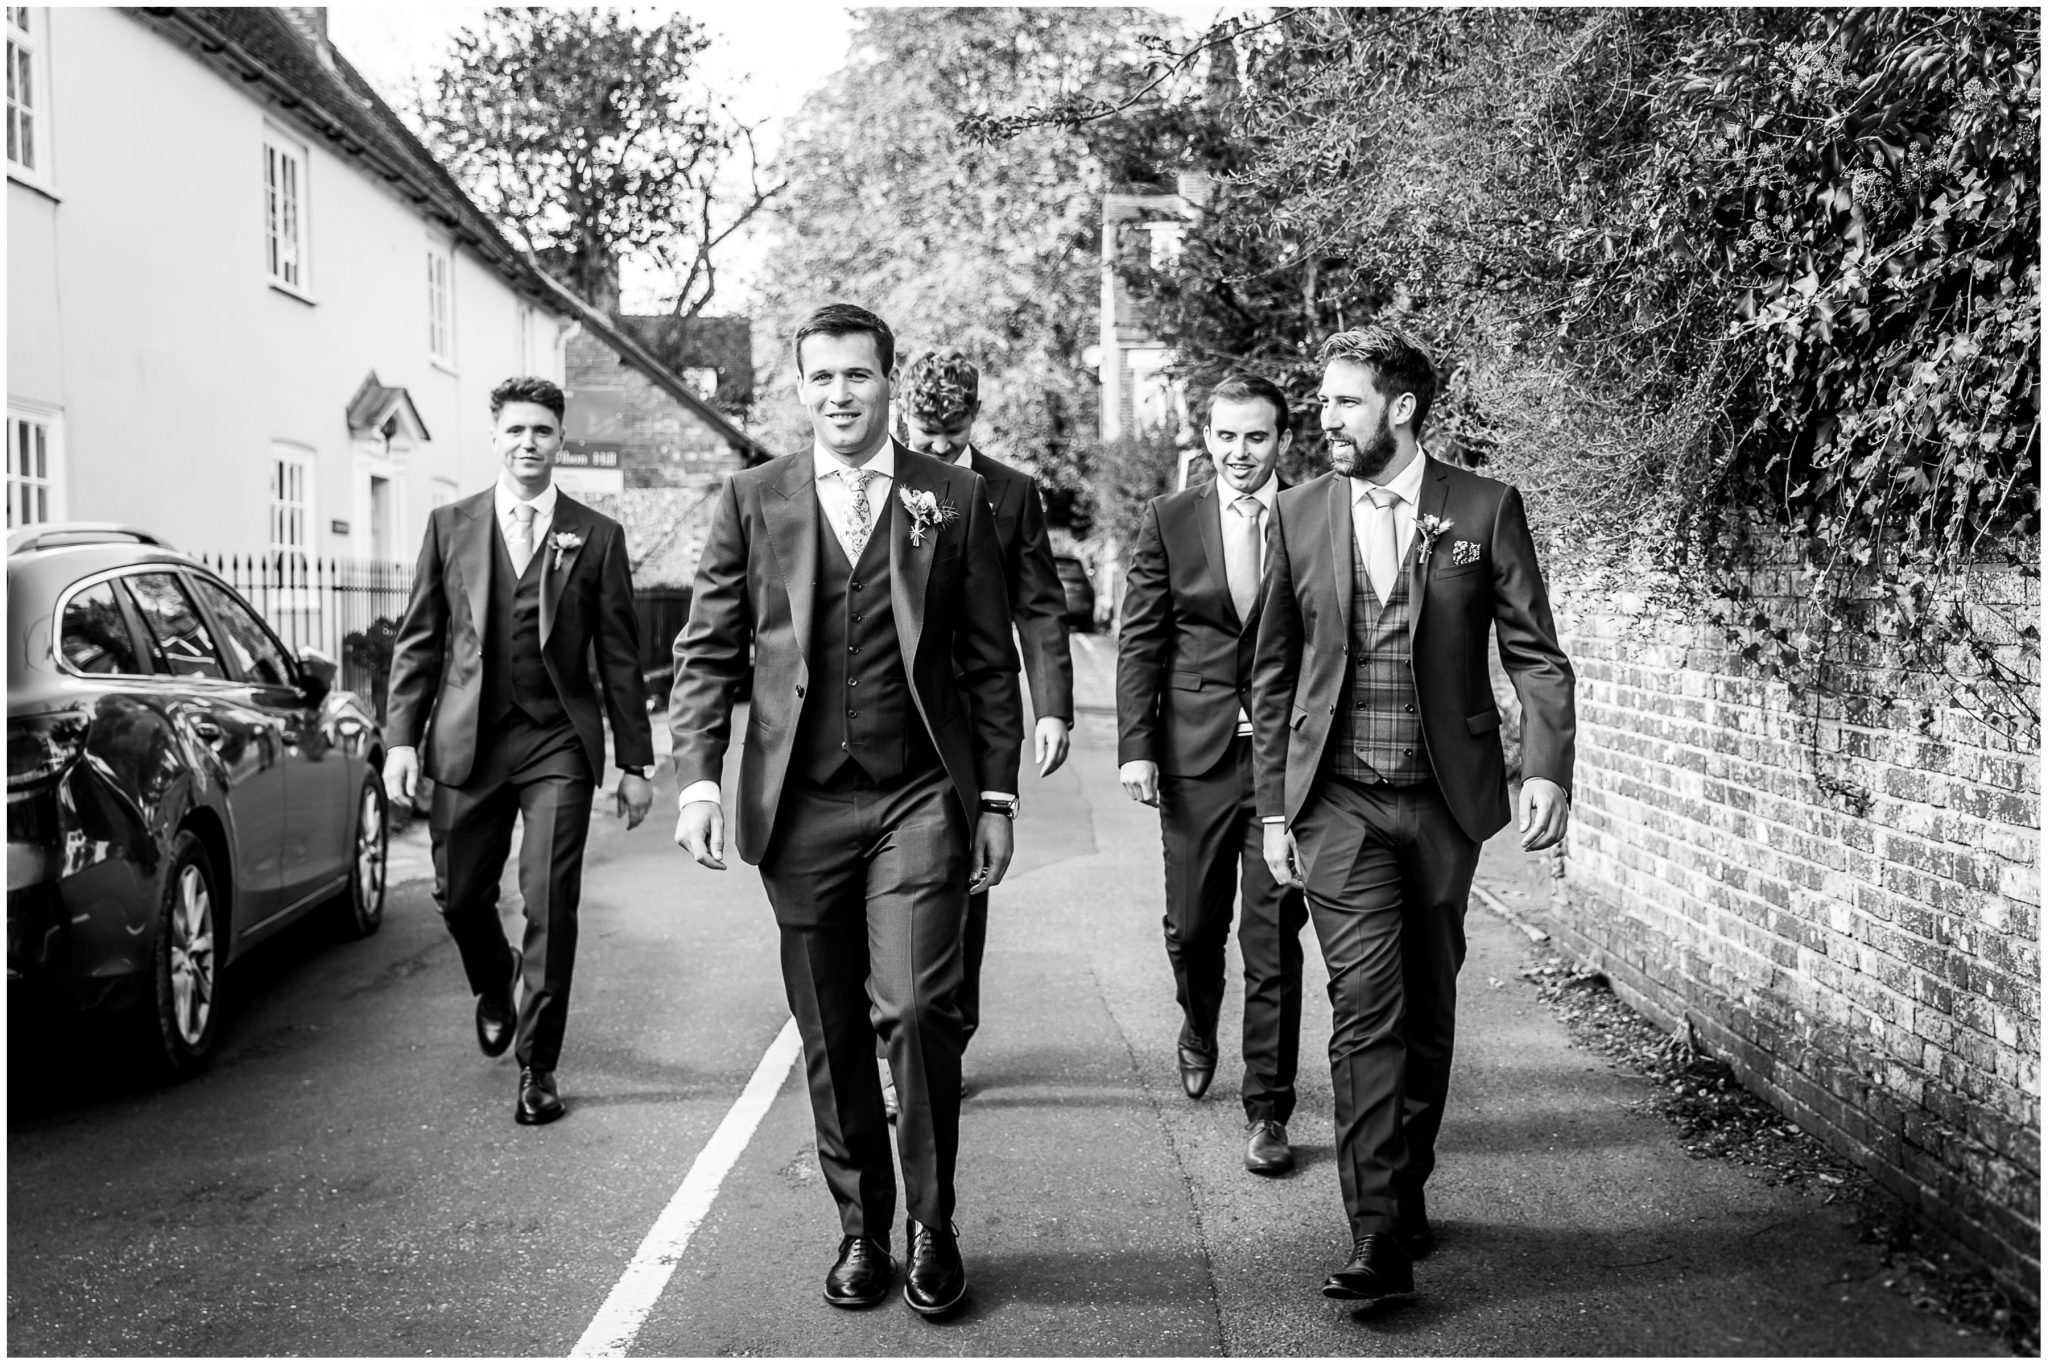 Groom and groomsmen walking through Droxford village to the church